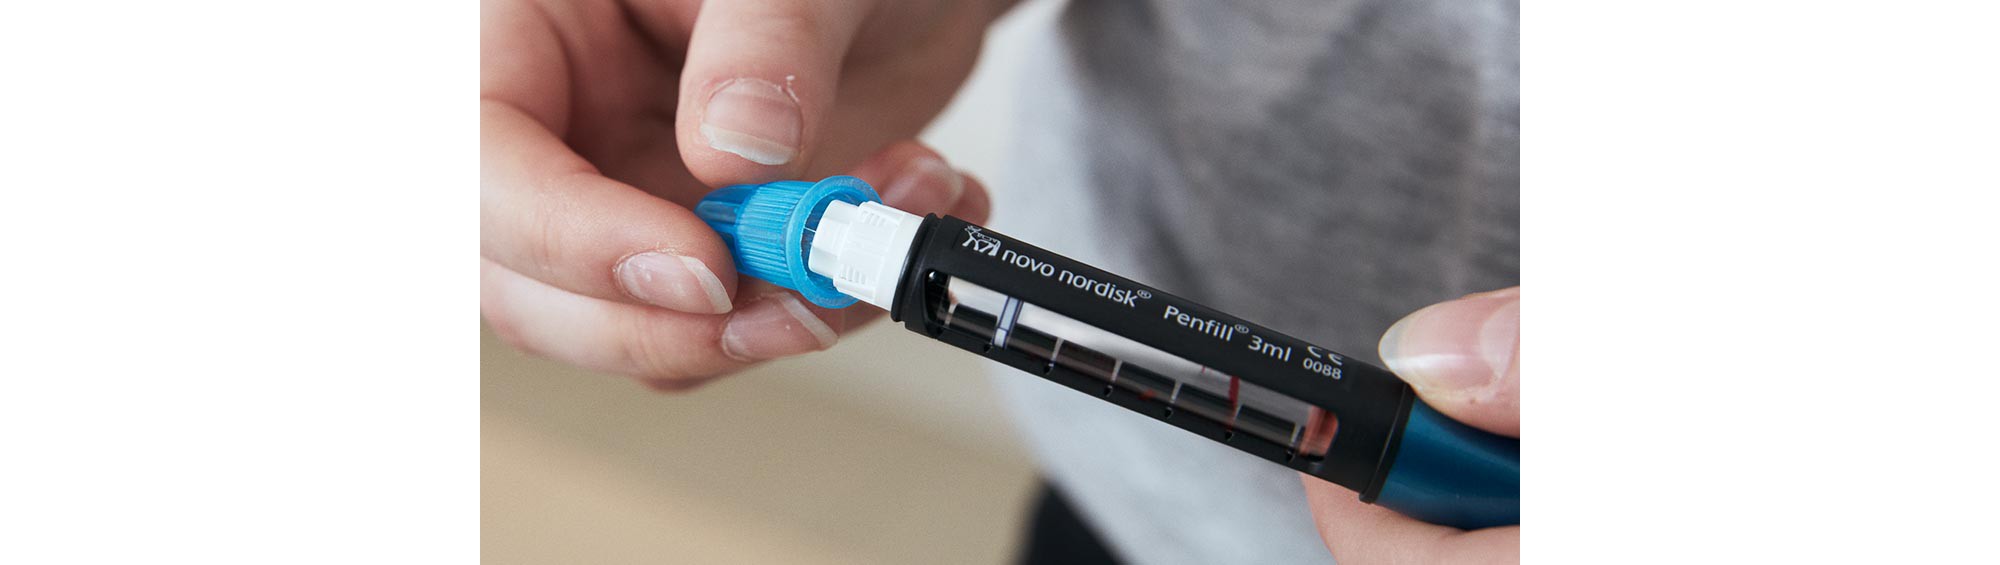 Novo Nordisk needle portfolio, injection needles